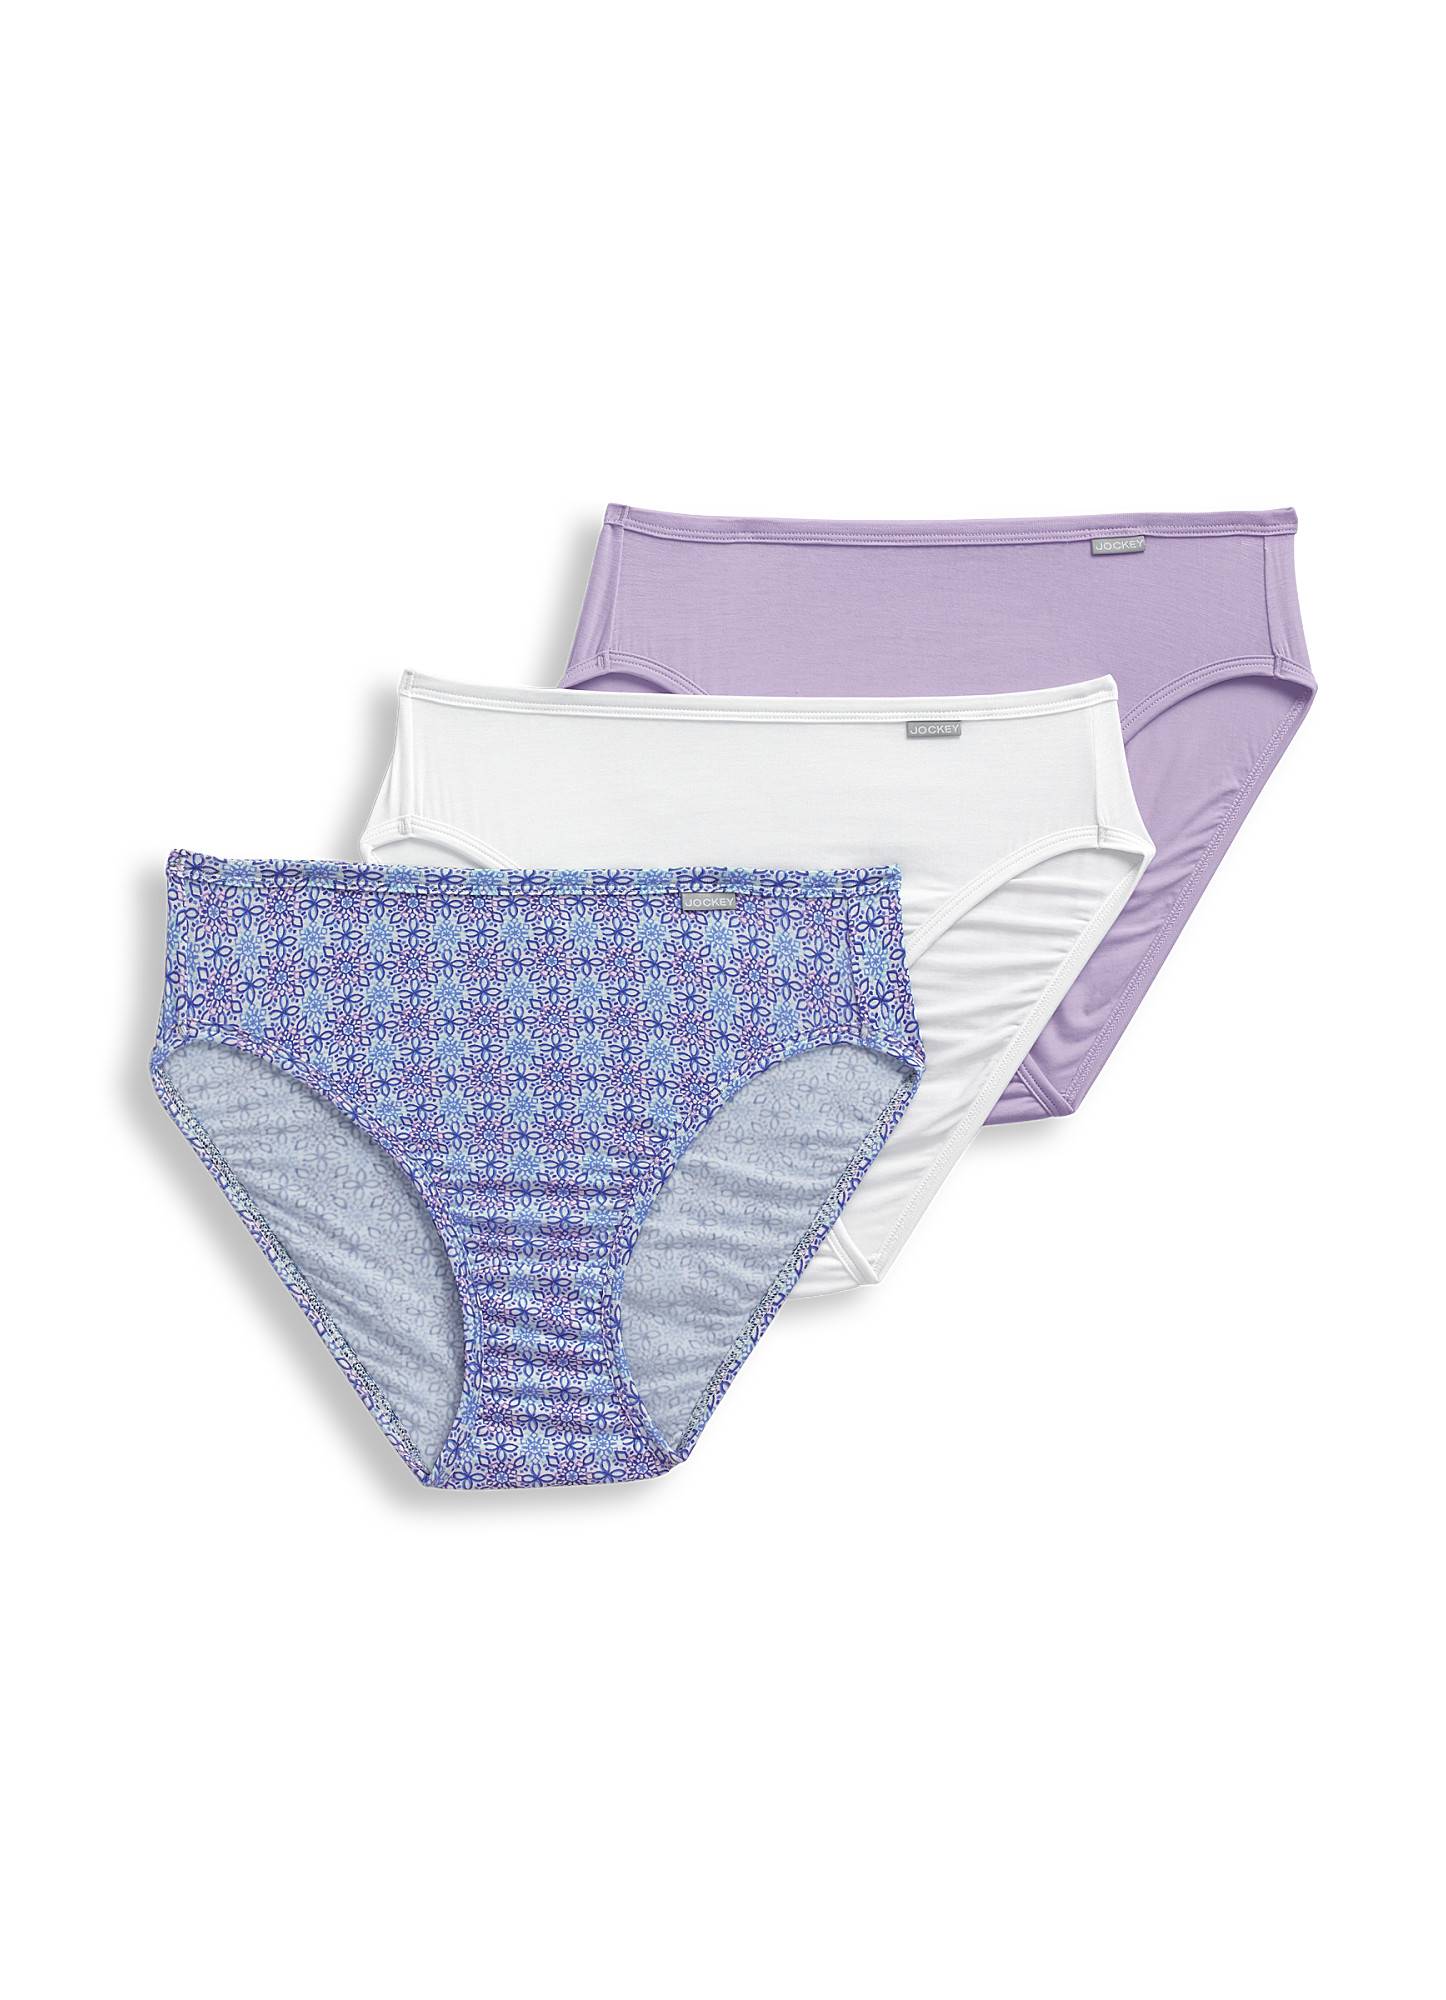 Jockey Womens Supersoft French Cut 3 Pack Underwear French Cuts viscose ...